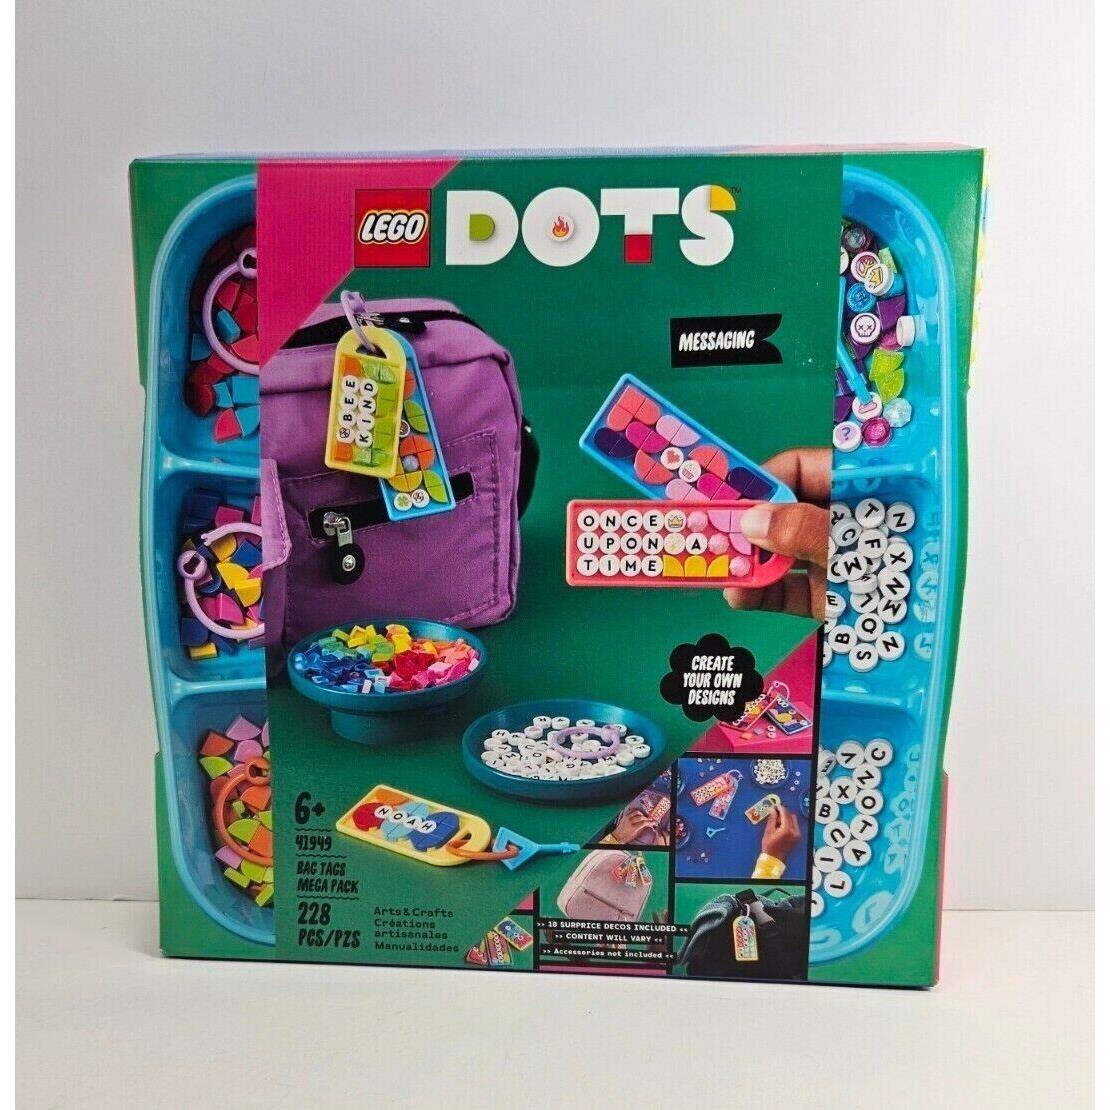 Lego Dots: Bag Tags Mega Pack - Messaging 41949